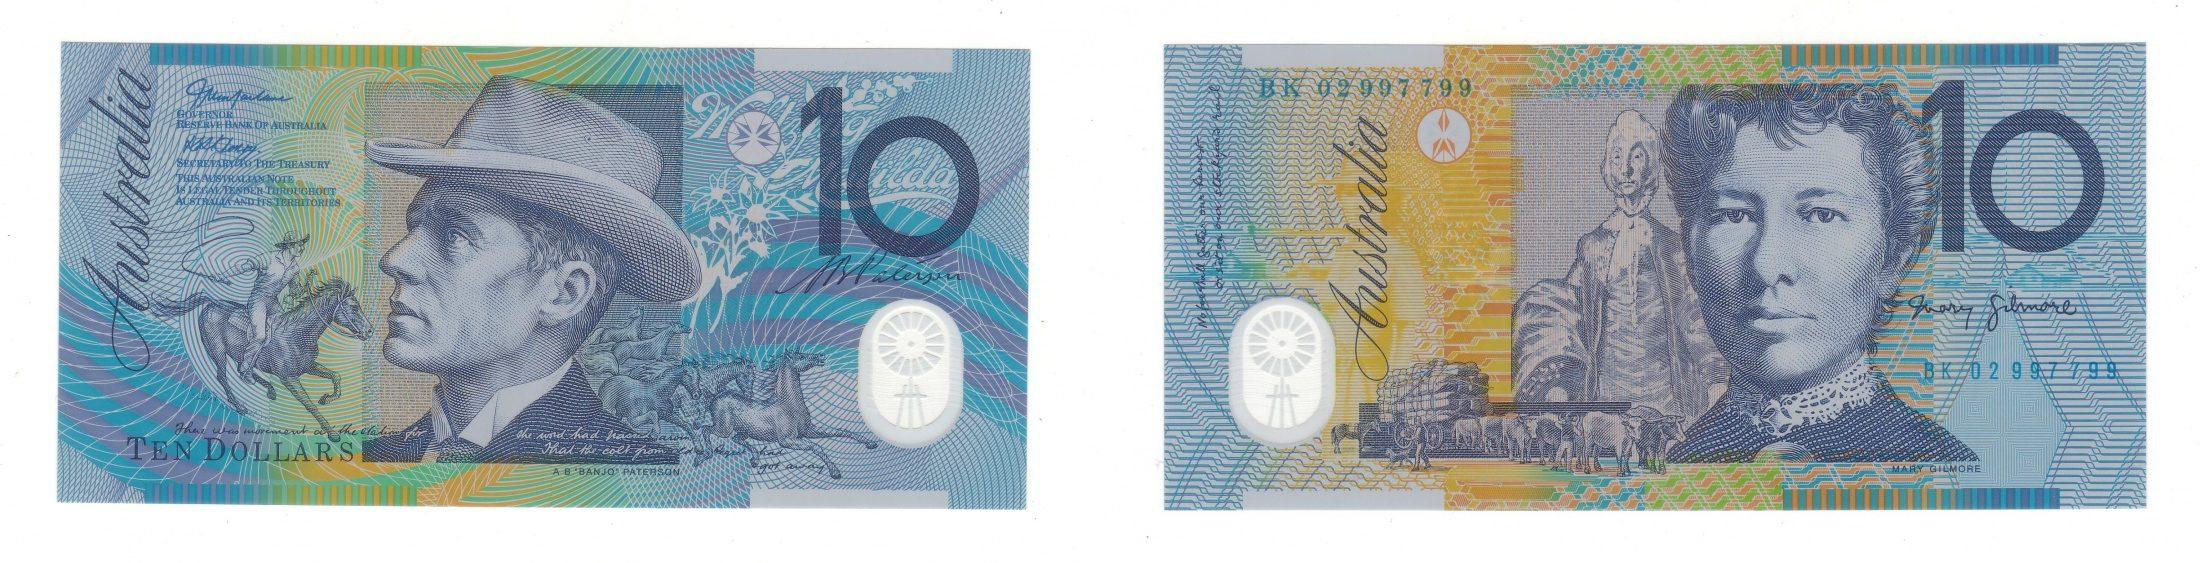 Foto Australie 10 dollars 2002